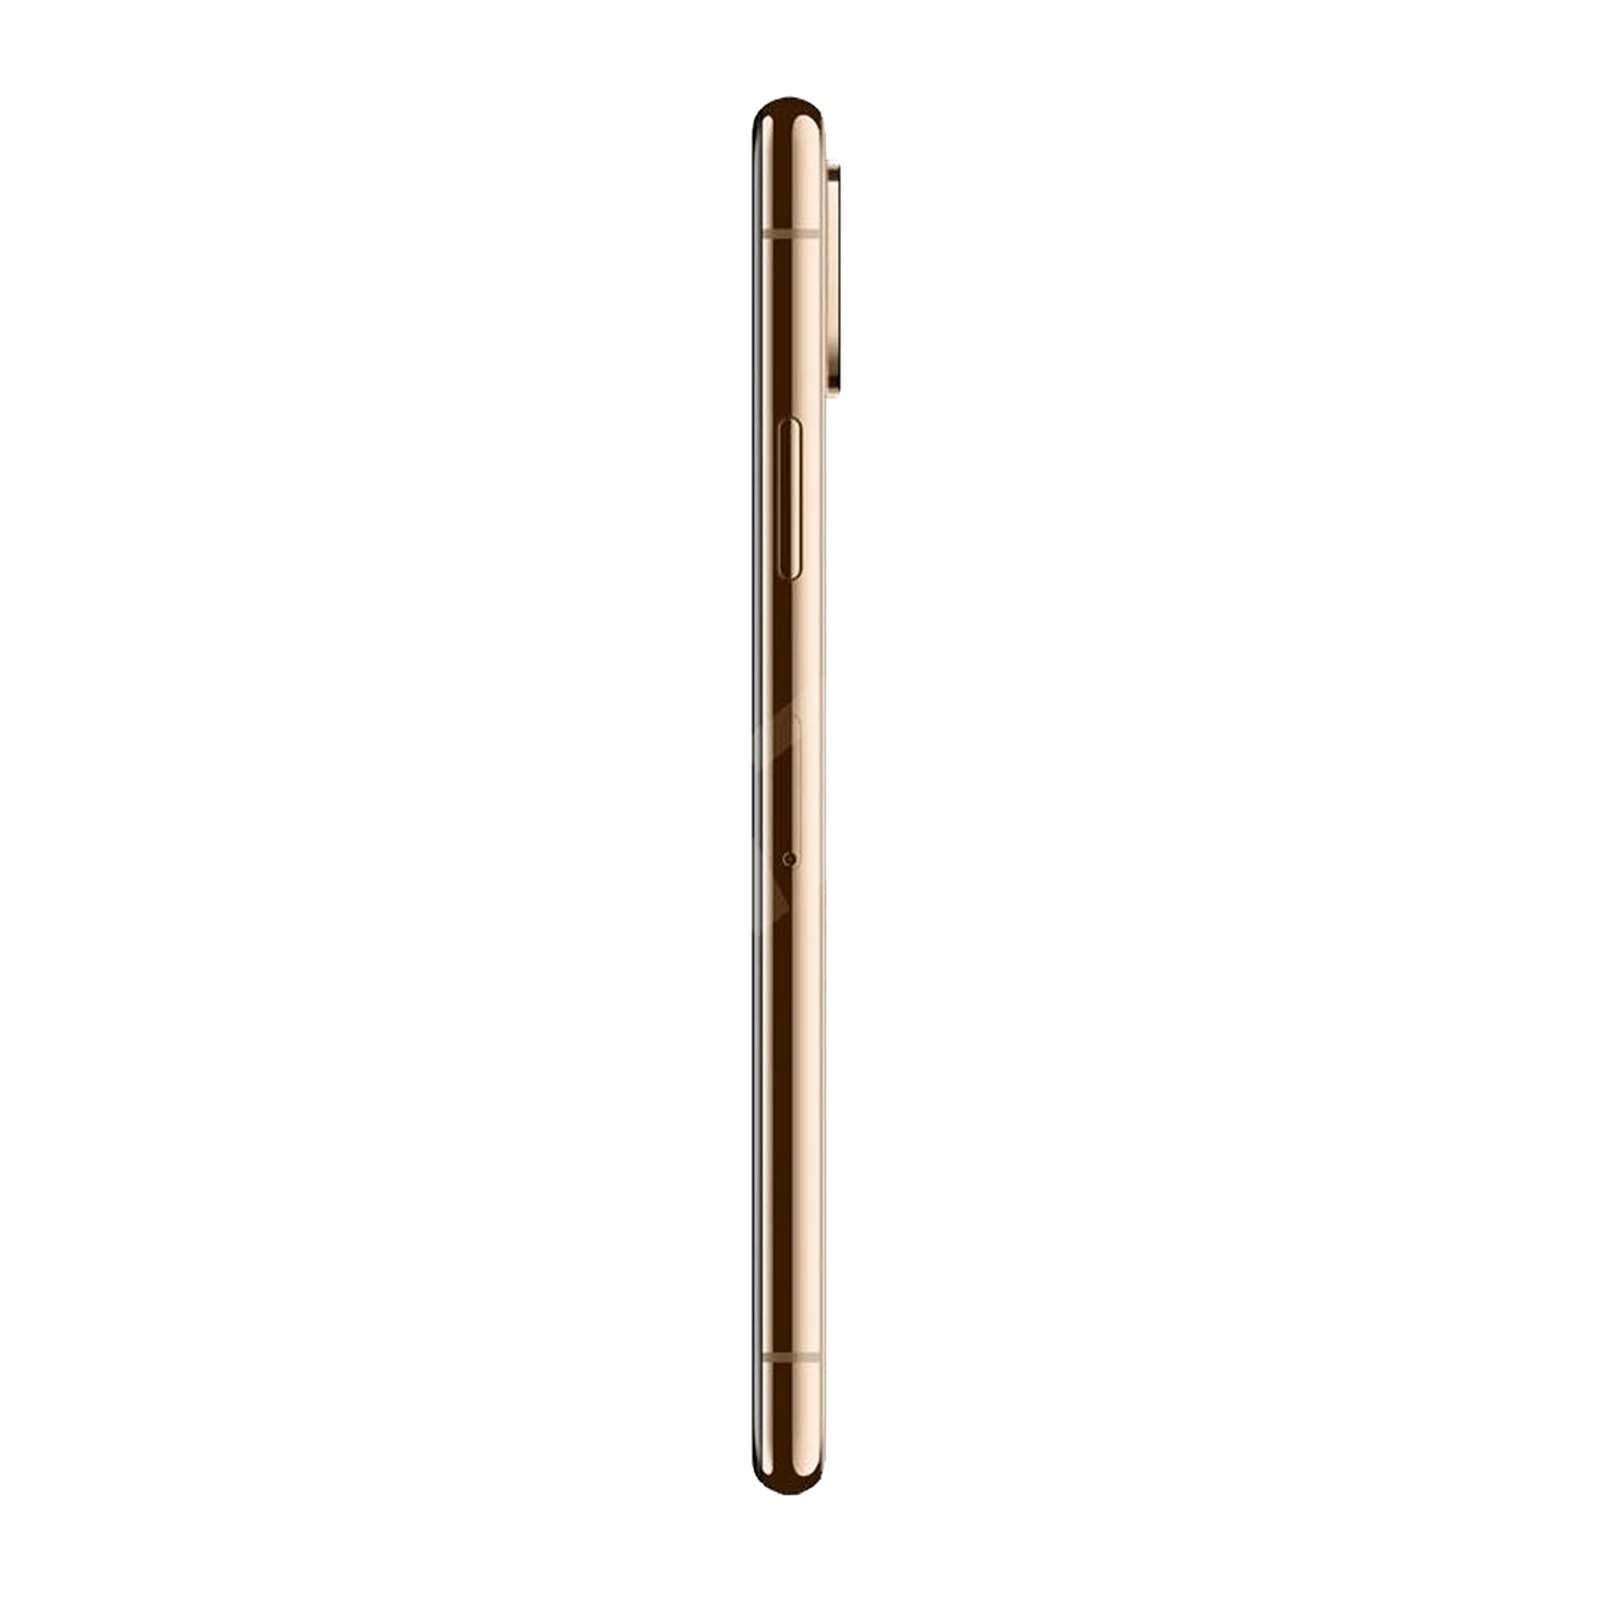 Apple iPhone XS Max 64GB Gold Unlocked Good – Loop Mobile - US